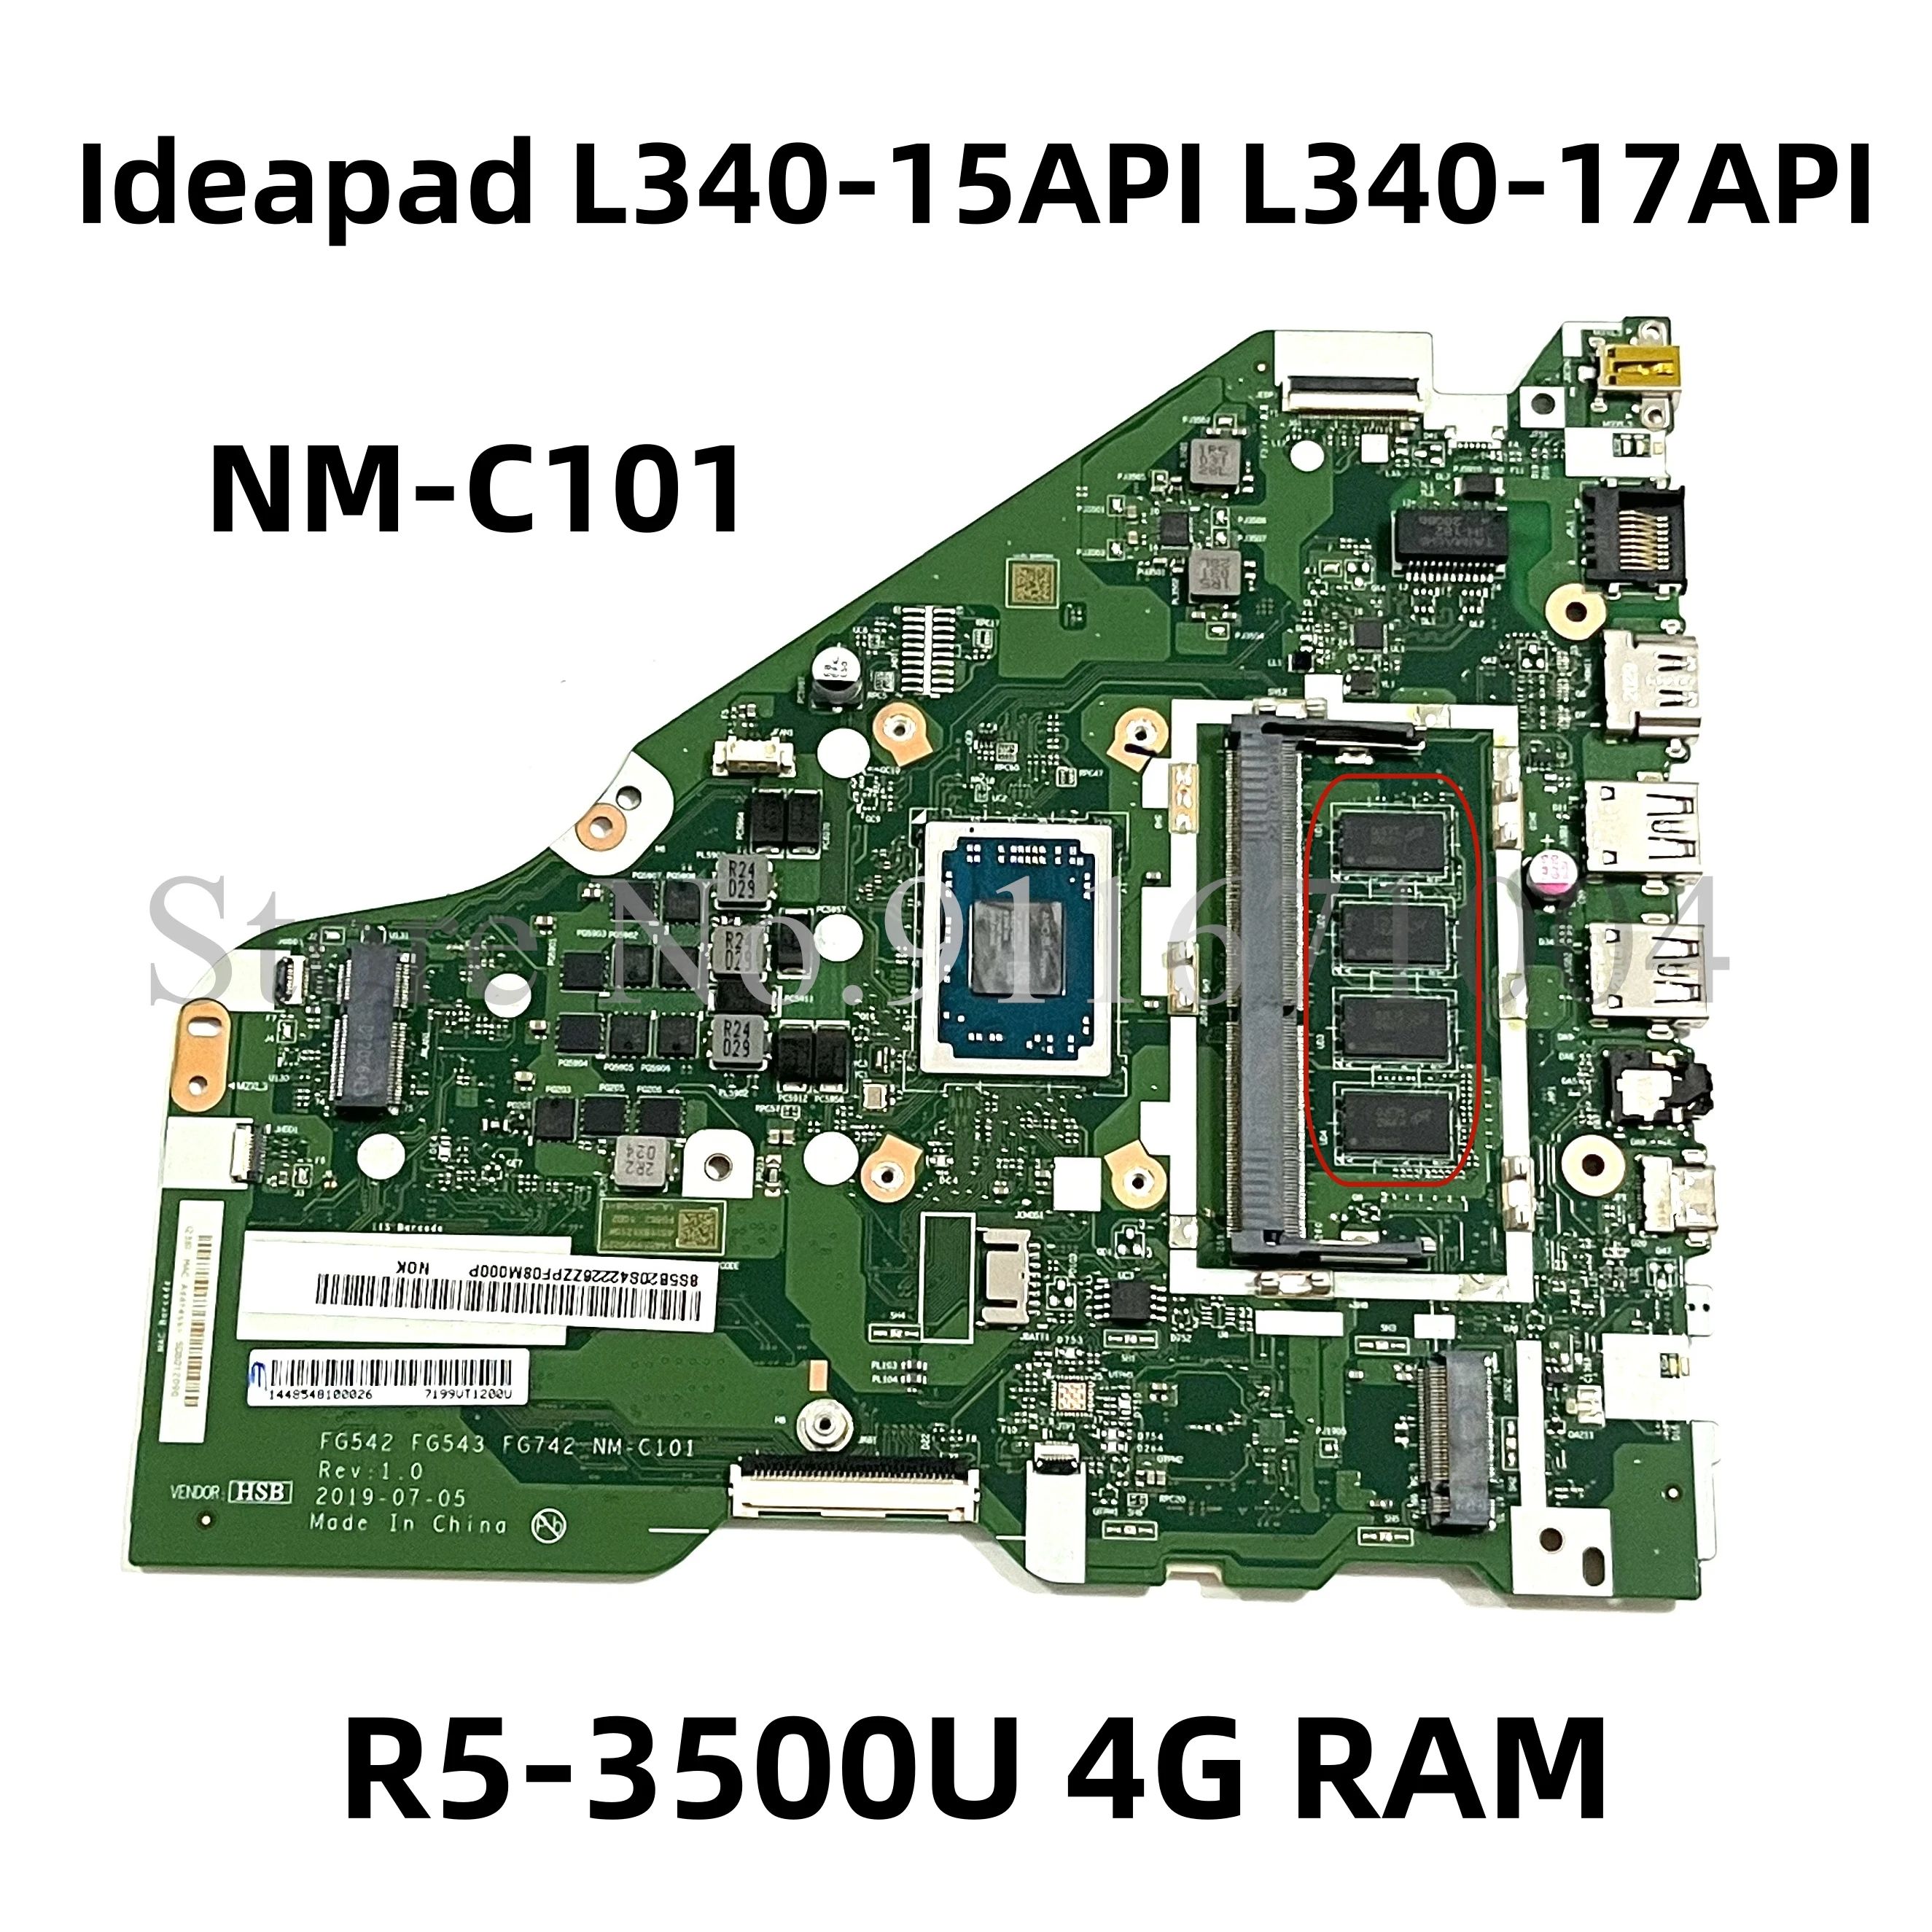 Konfiguration: R5-3500U 4G RAM